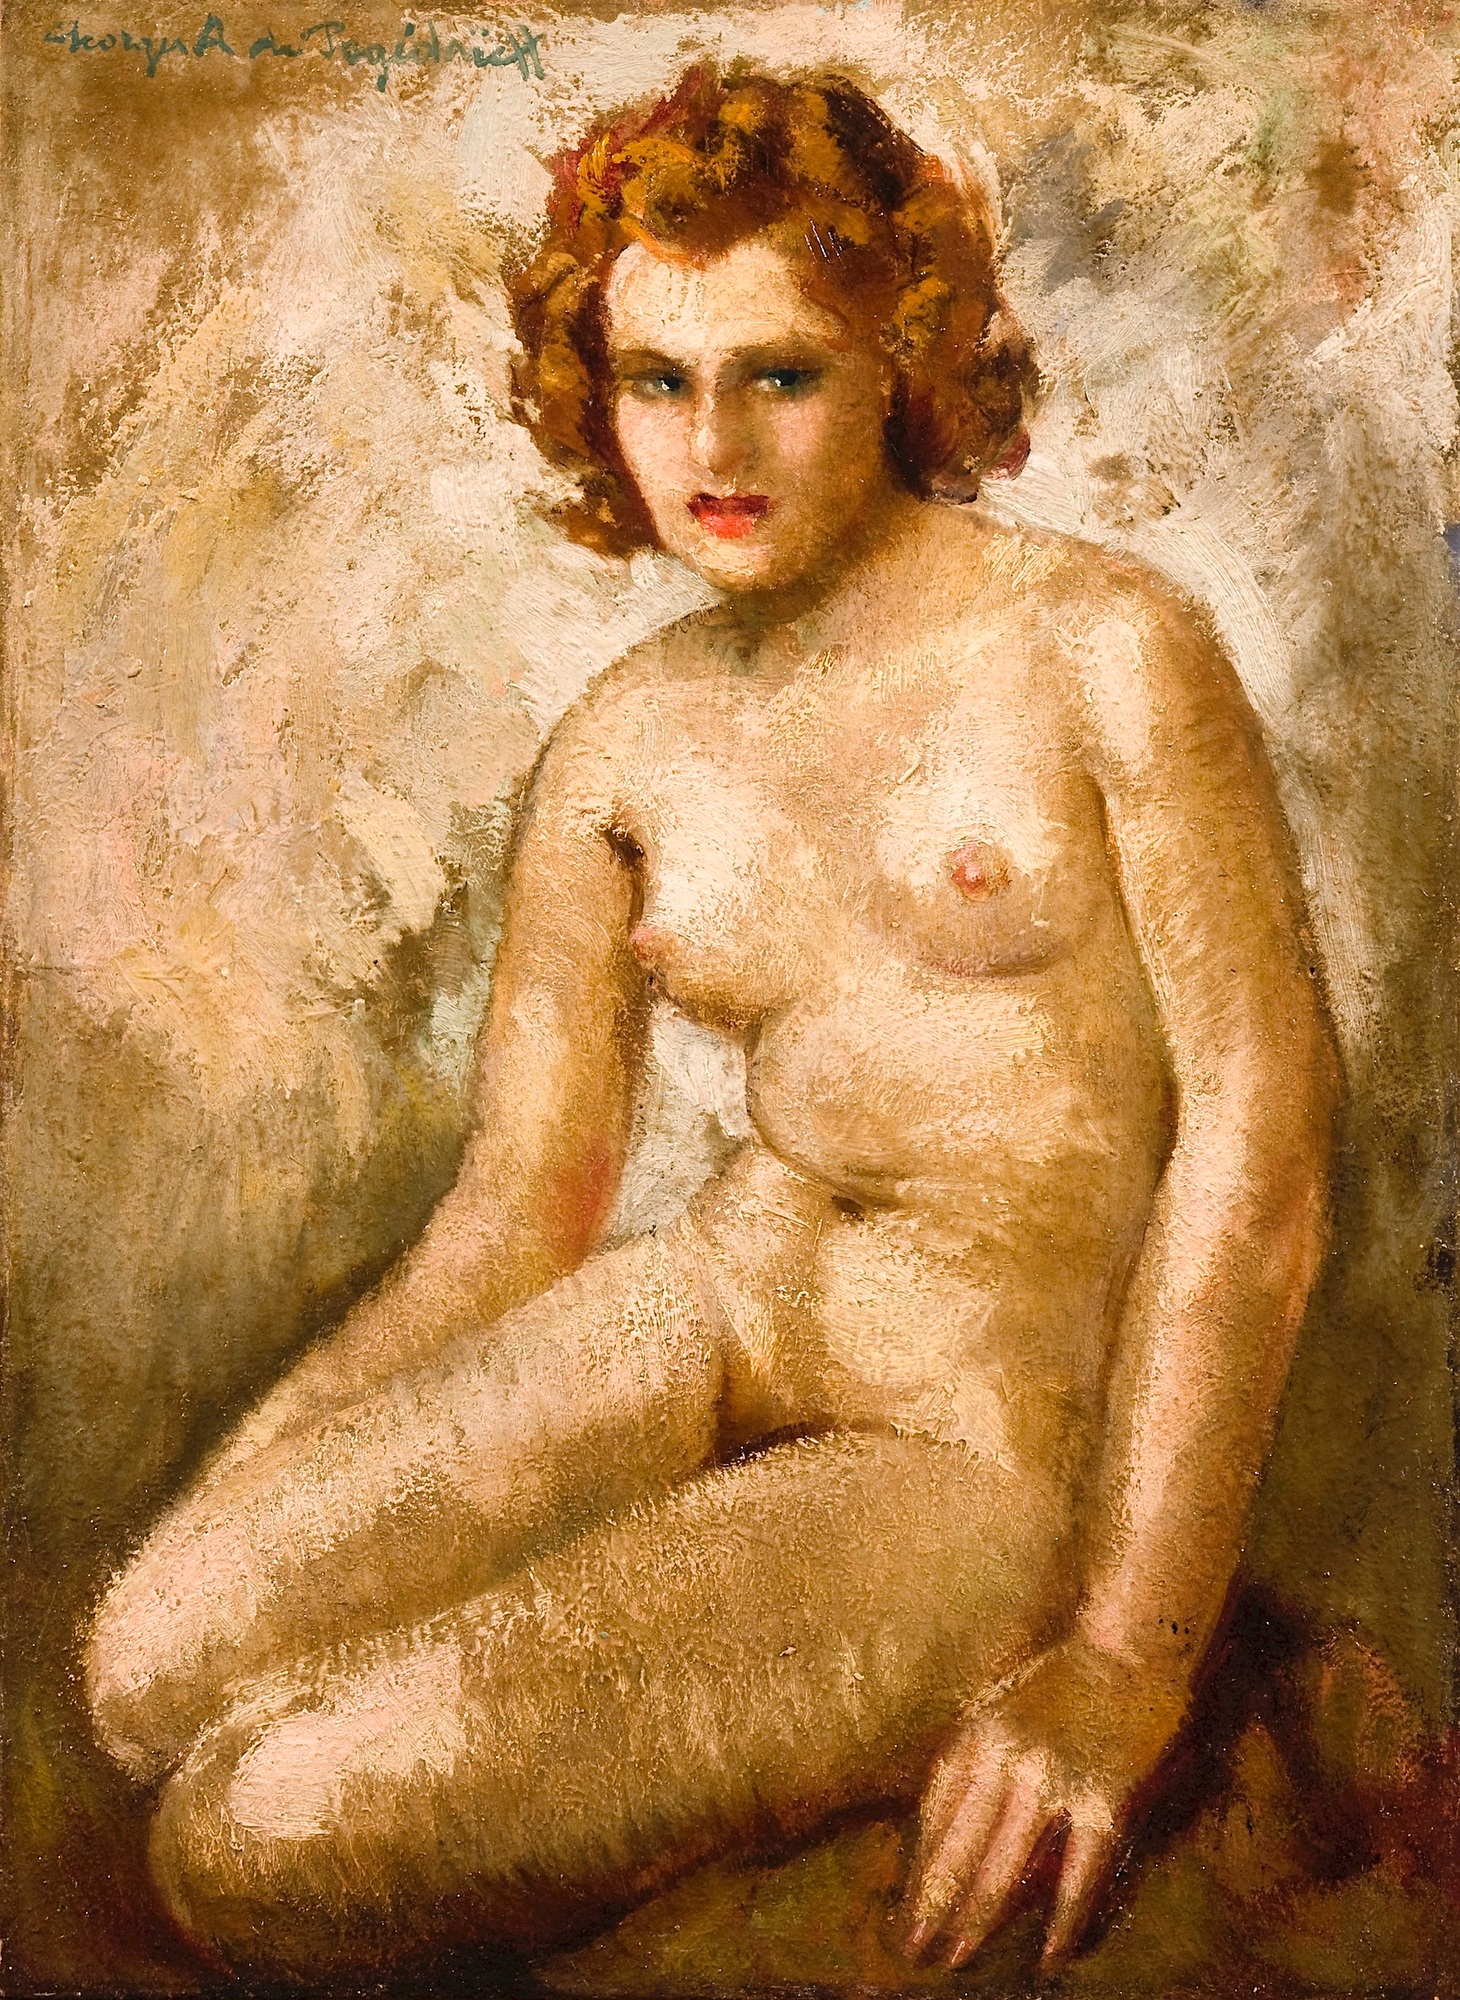 Seated Nude